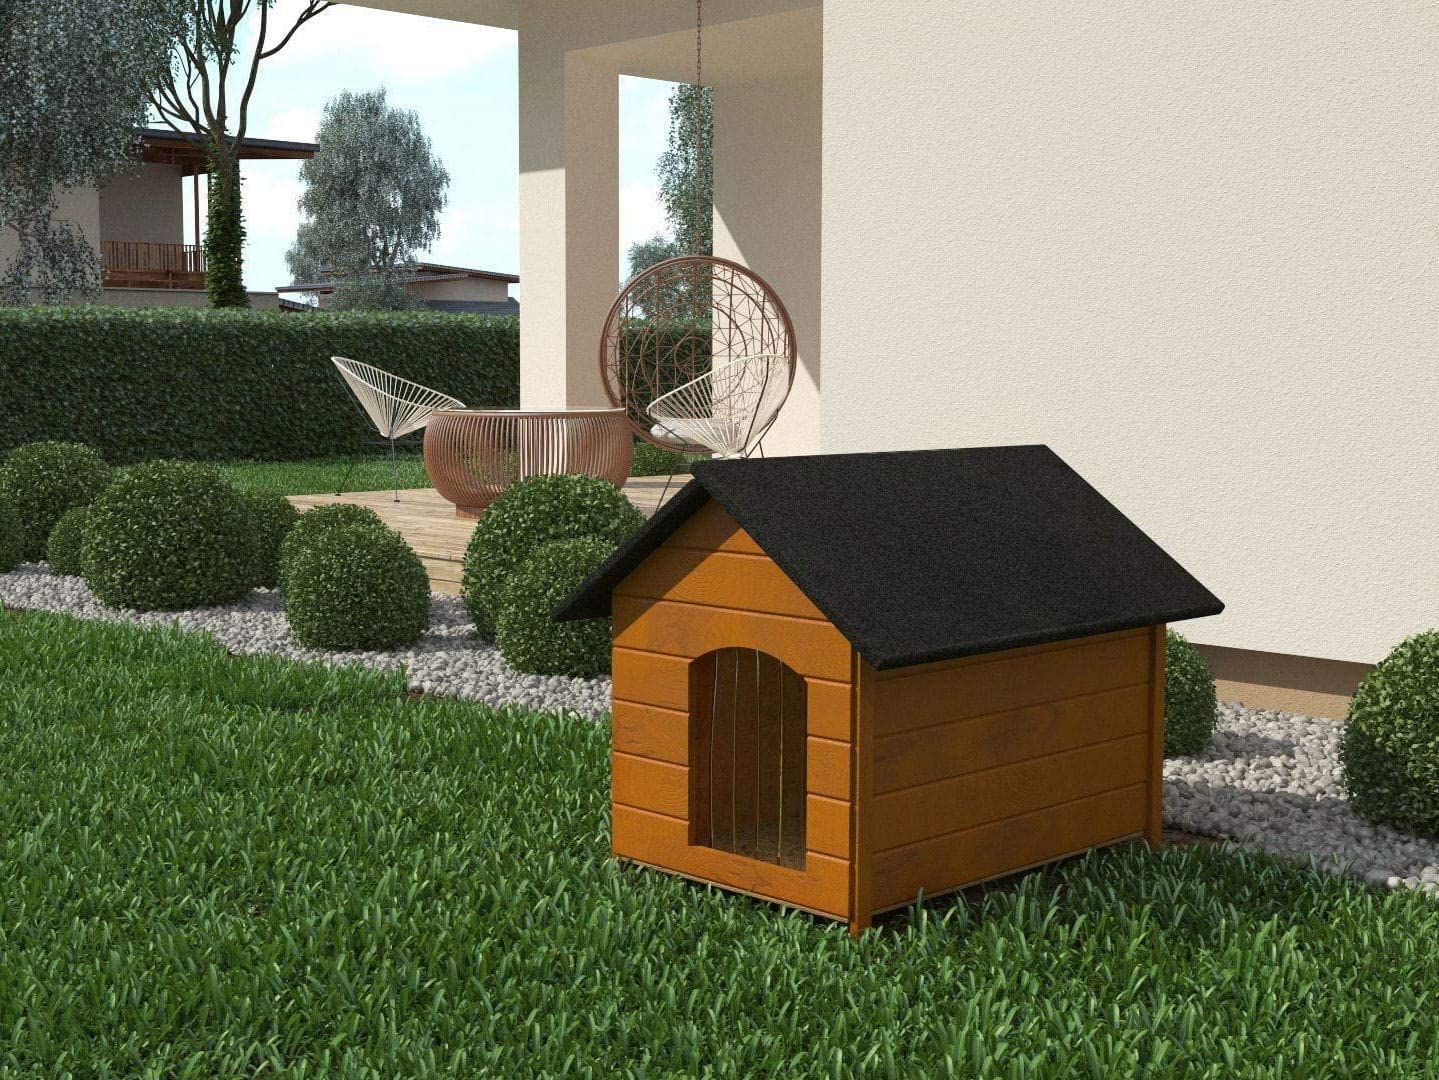  Novamat - Caseta de madera para perros, extra grande, paredes aisladas, resistente a la intemperie, jardín, terraza, diferentes variantes 